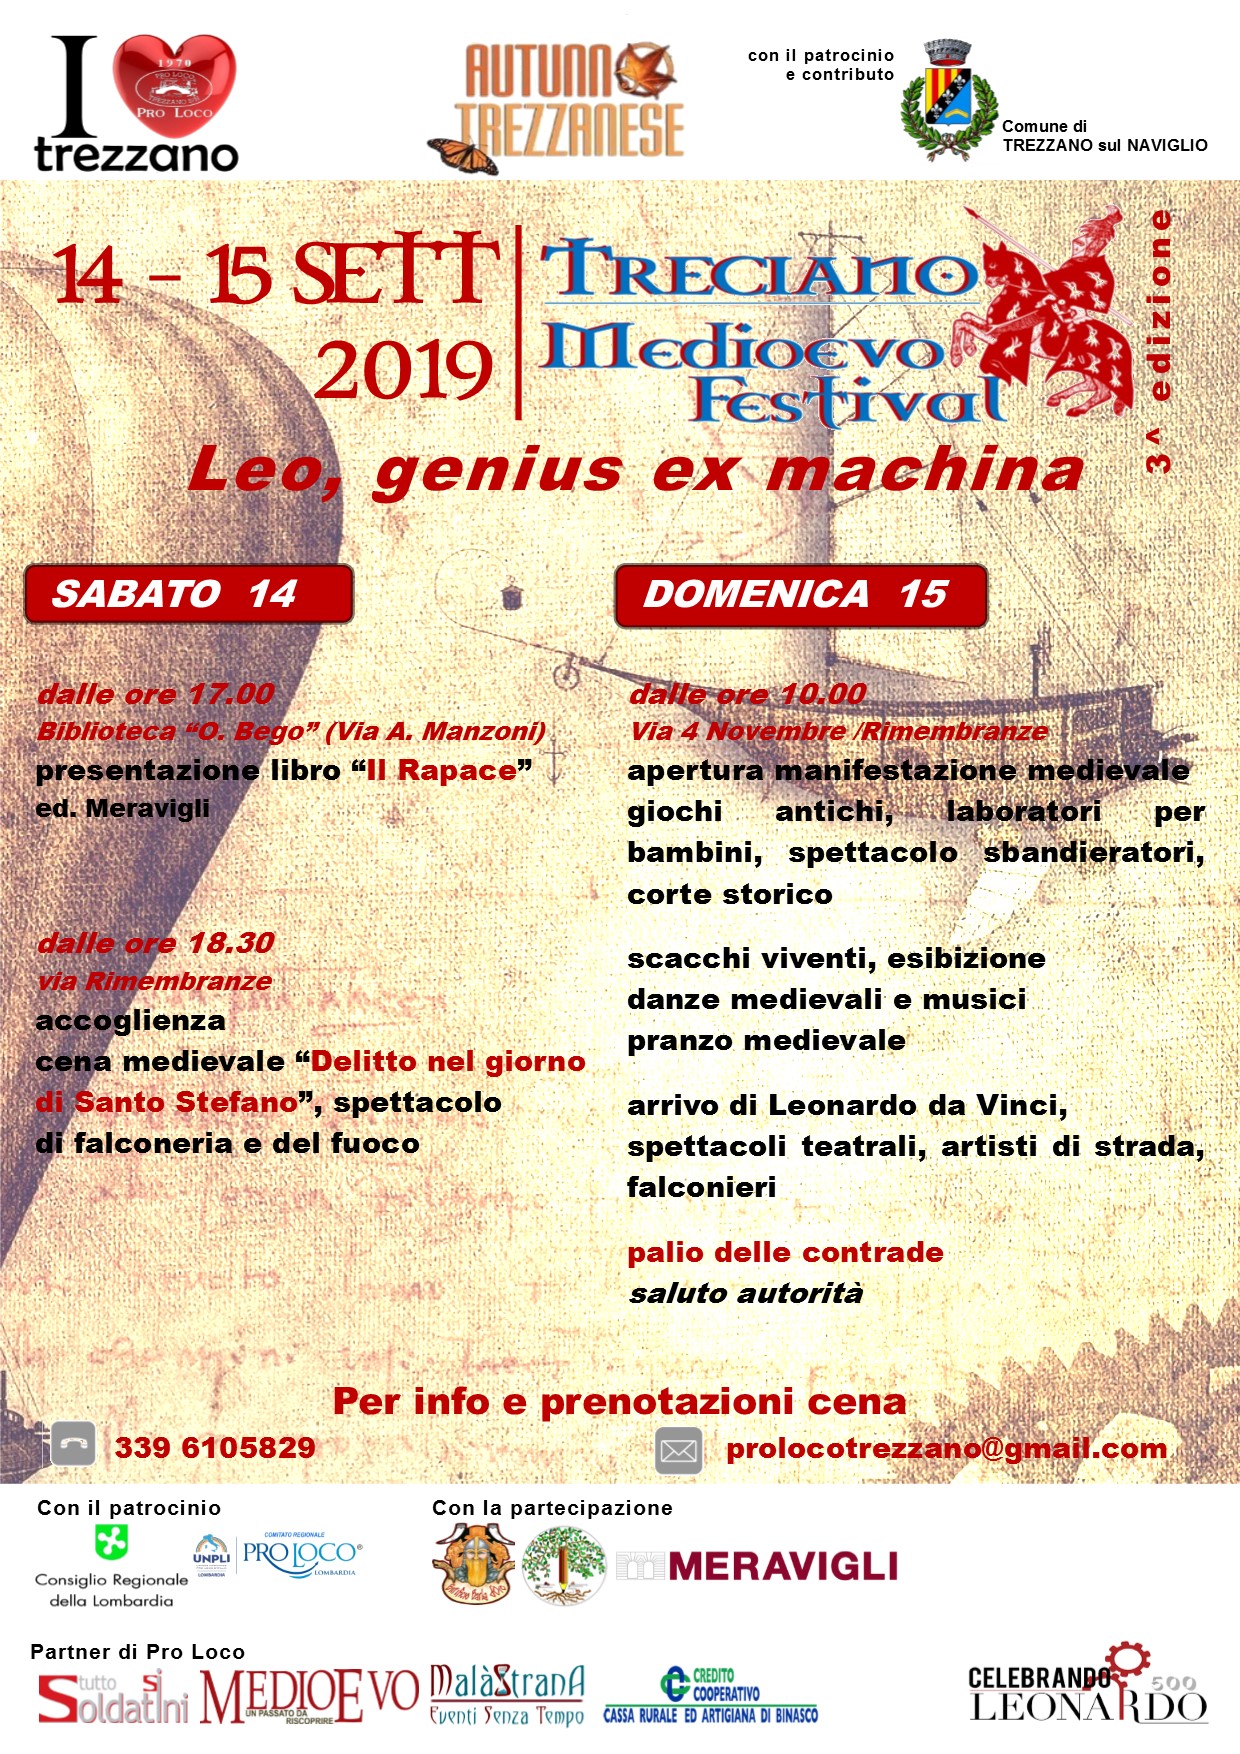 Treciano Medioevo Festival 2019 - Leo. genius ex machina